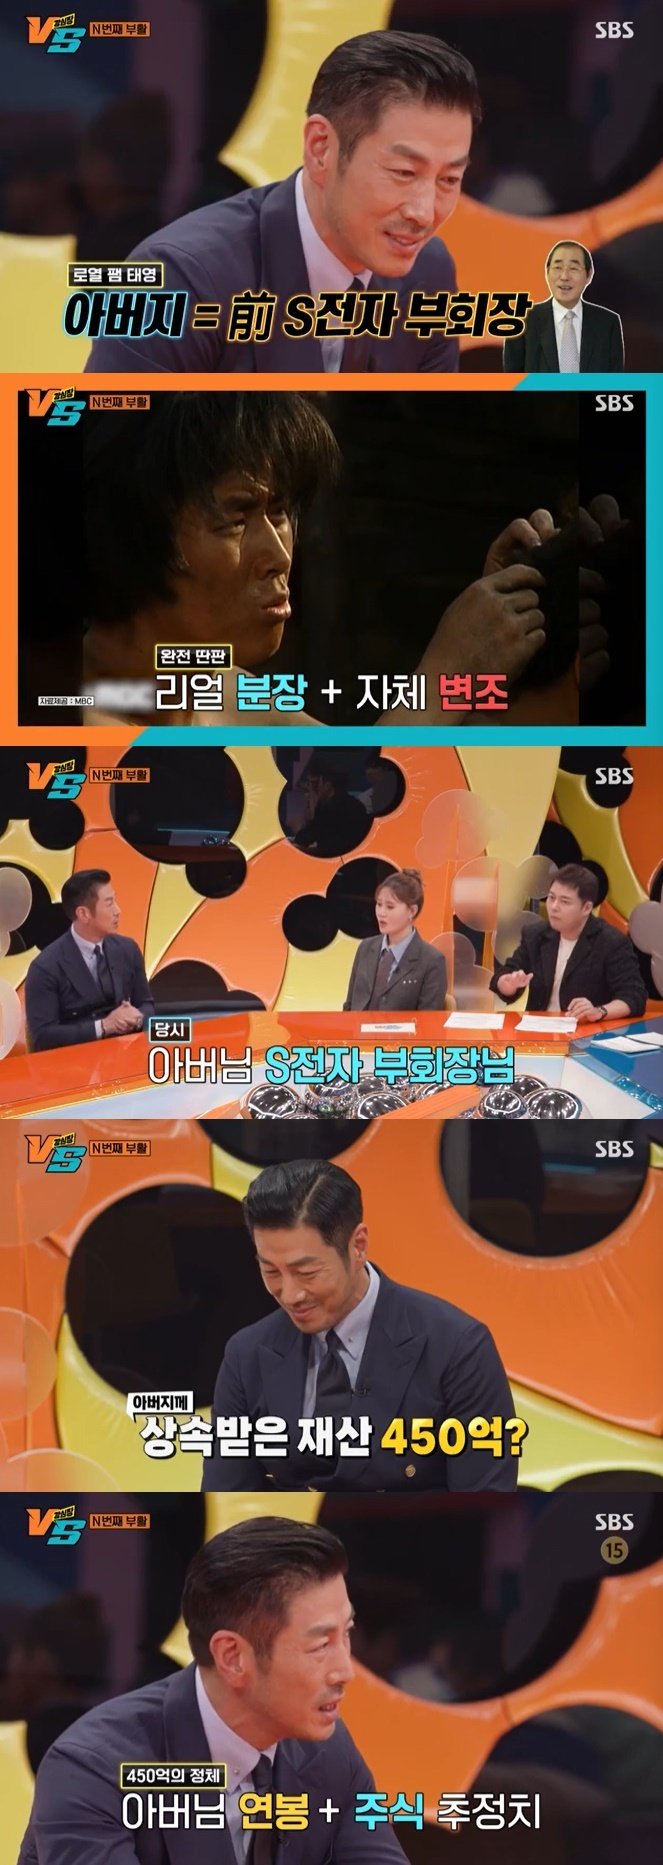 SBS '강심장VS' 캡처